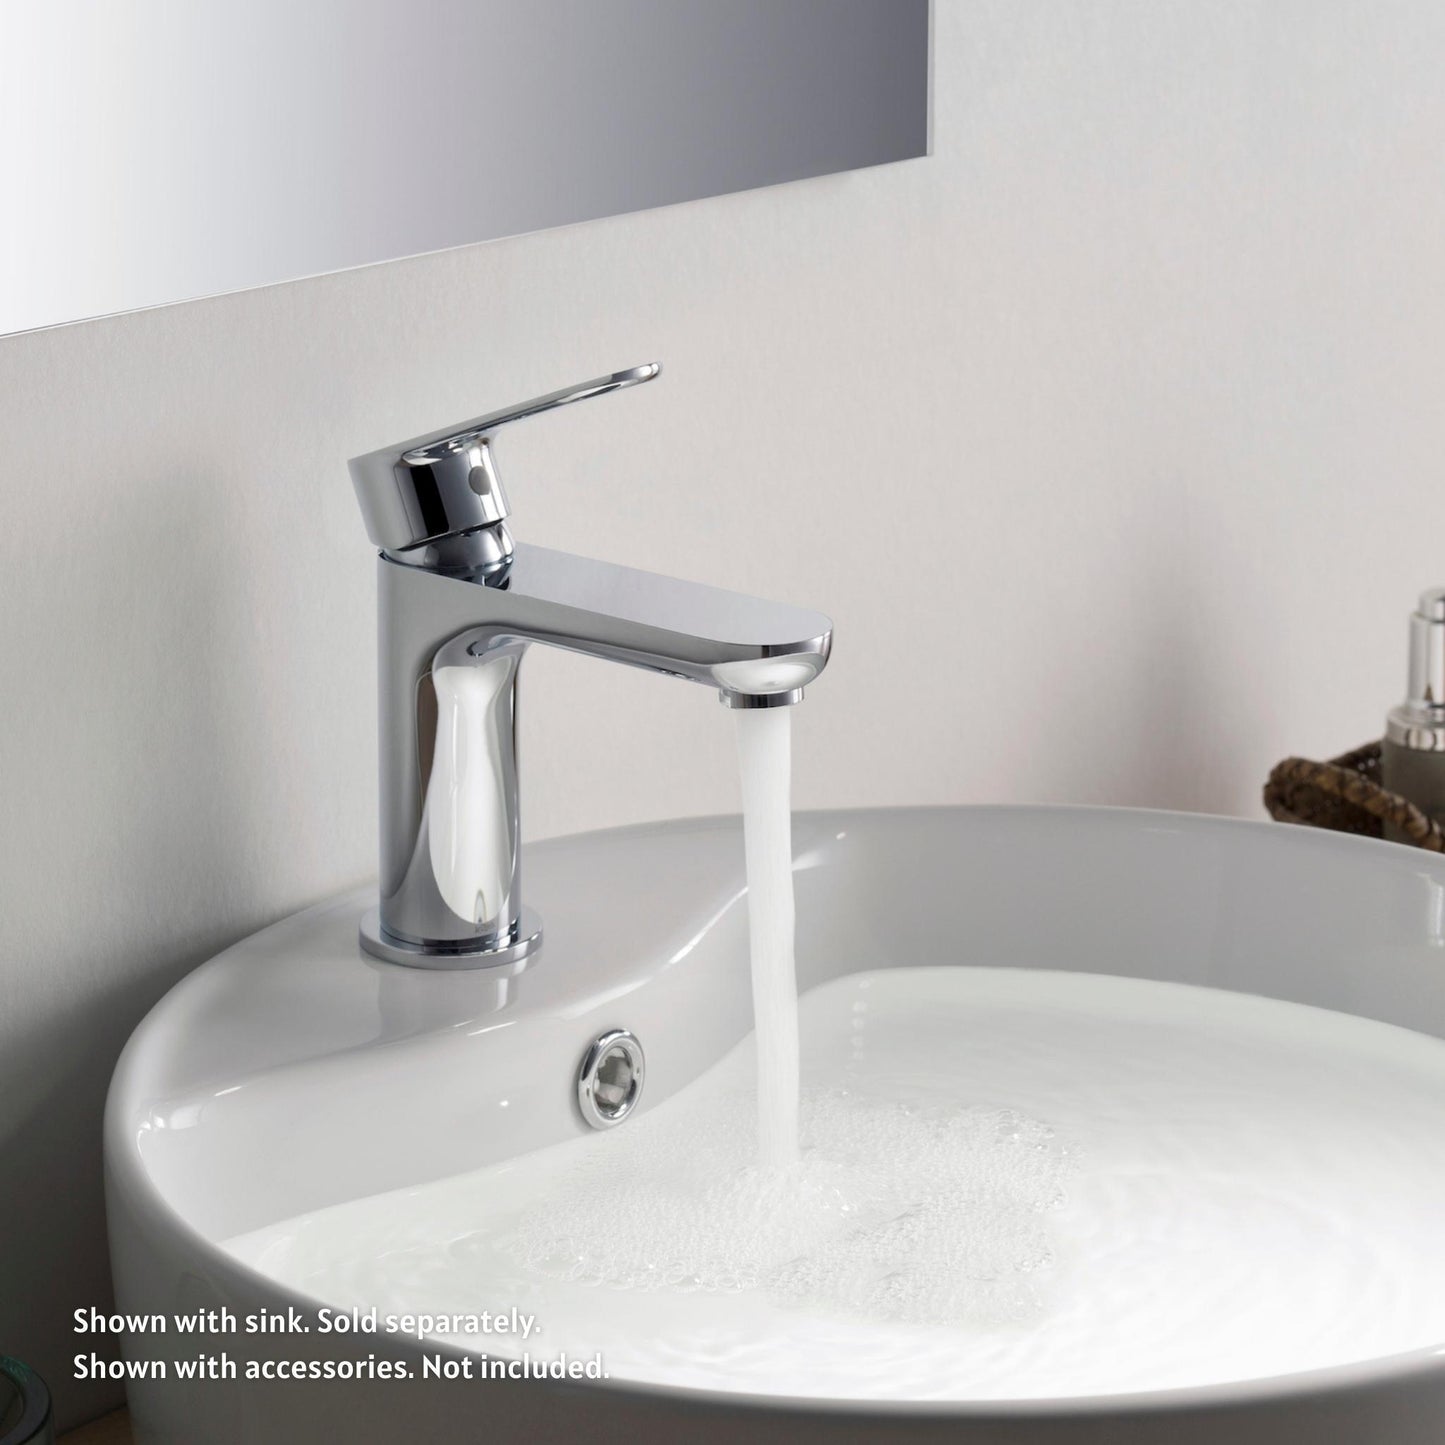 Blossom F01 119 4" x 6" Chrome Lever Handle Bathroom Sink Single Hole Faucet